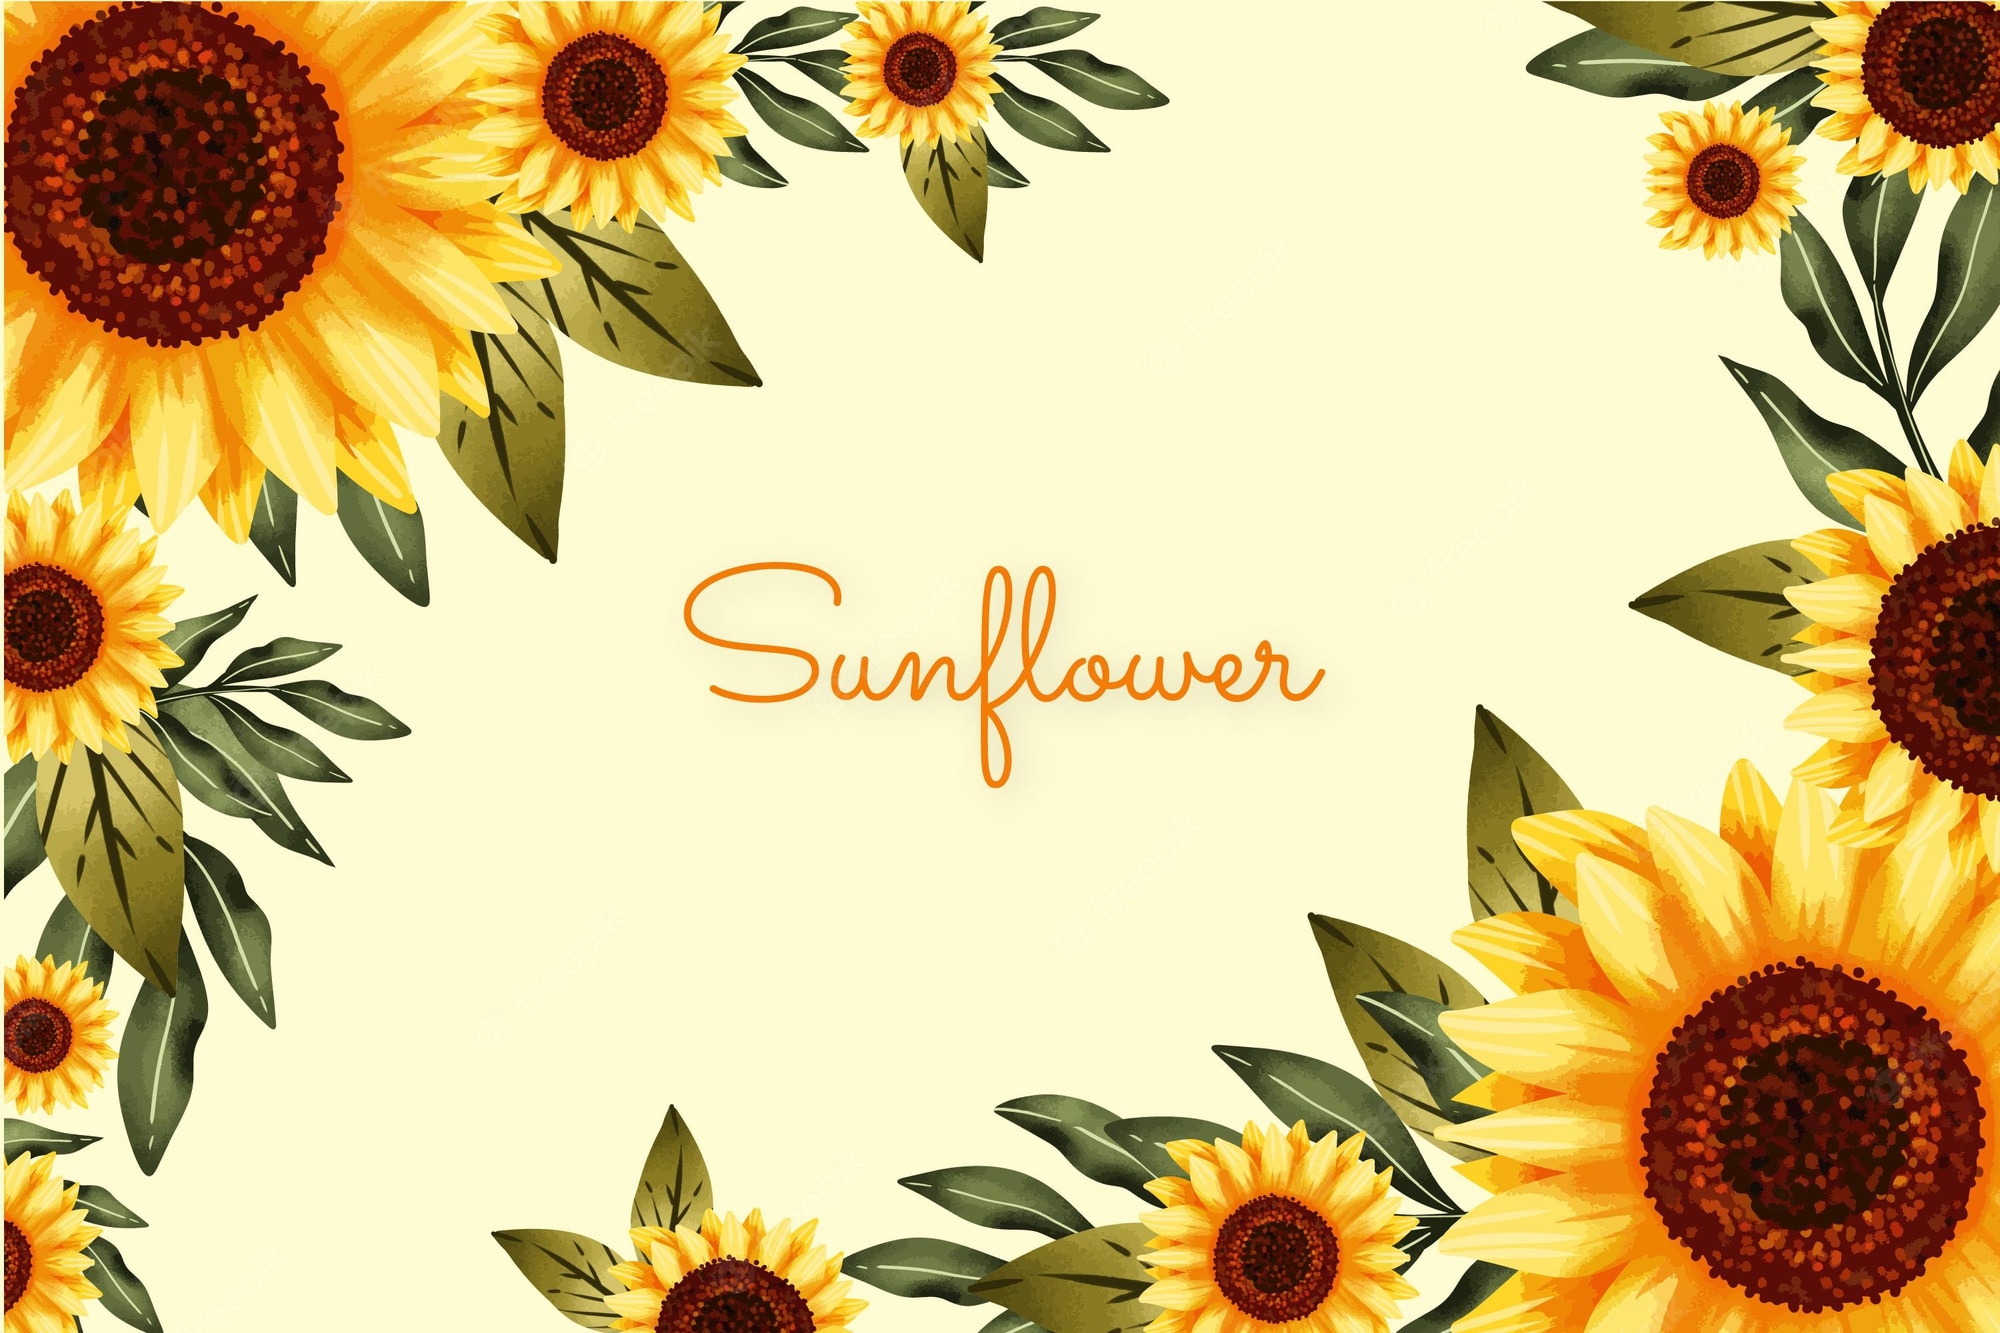 Sunflower Image. Free Vectors, & PSD